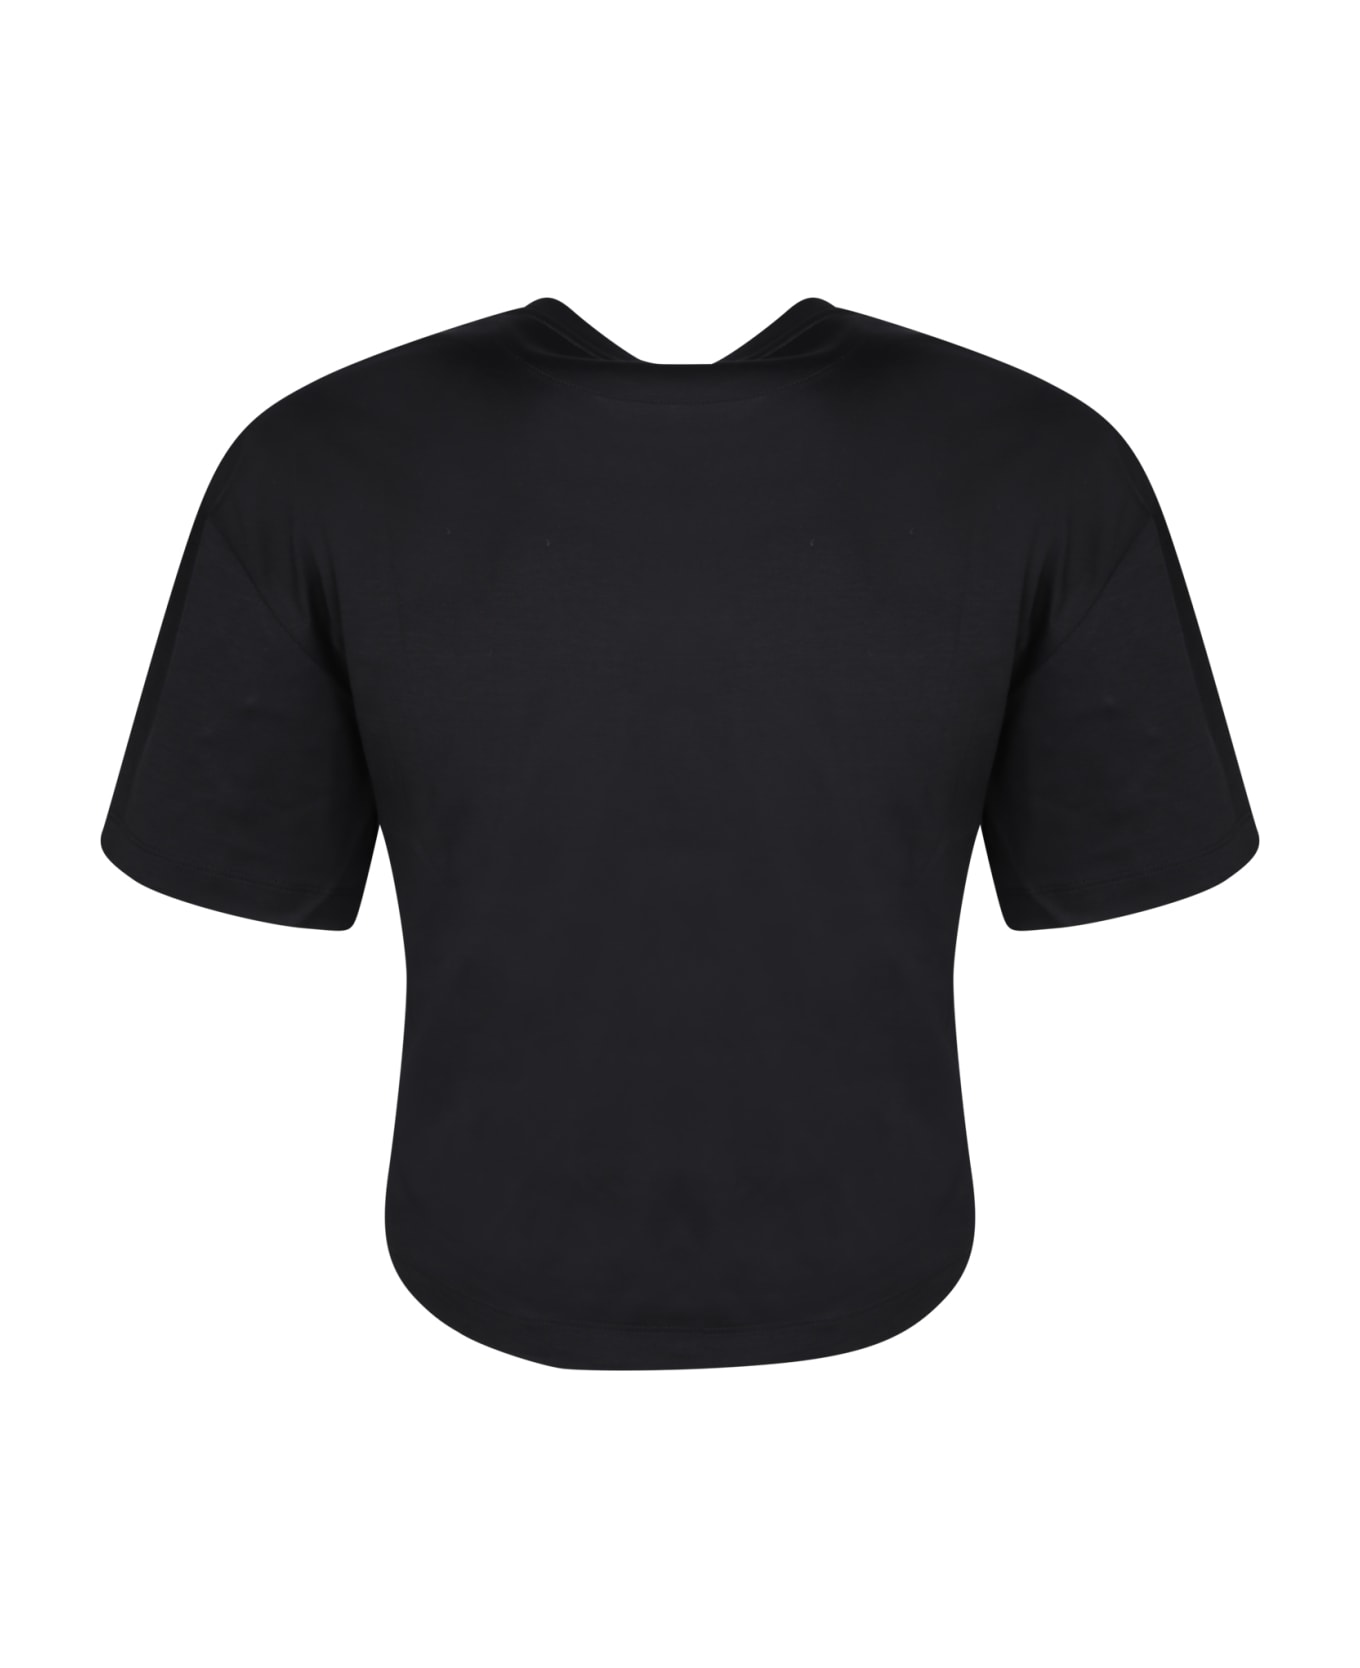 Paco Rabanne Black Ring Crop T-shirt - Black